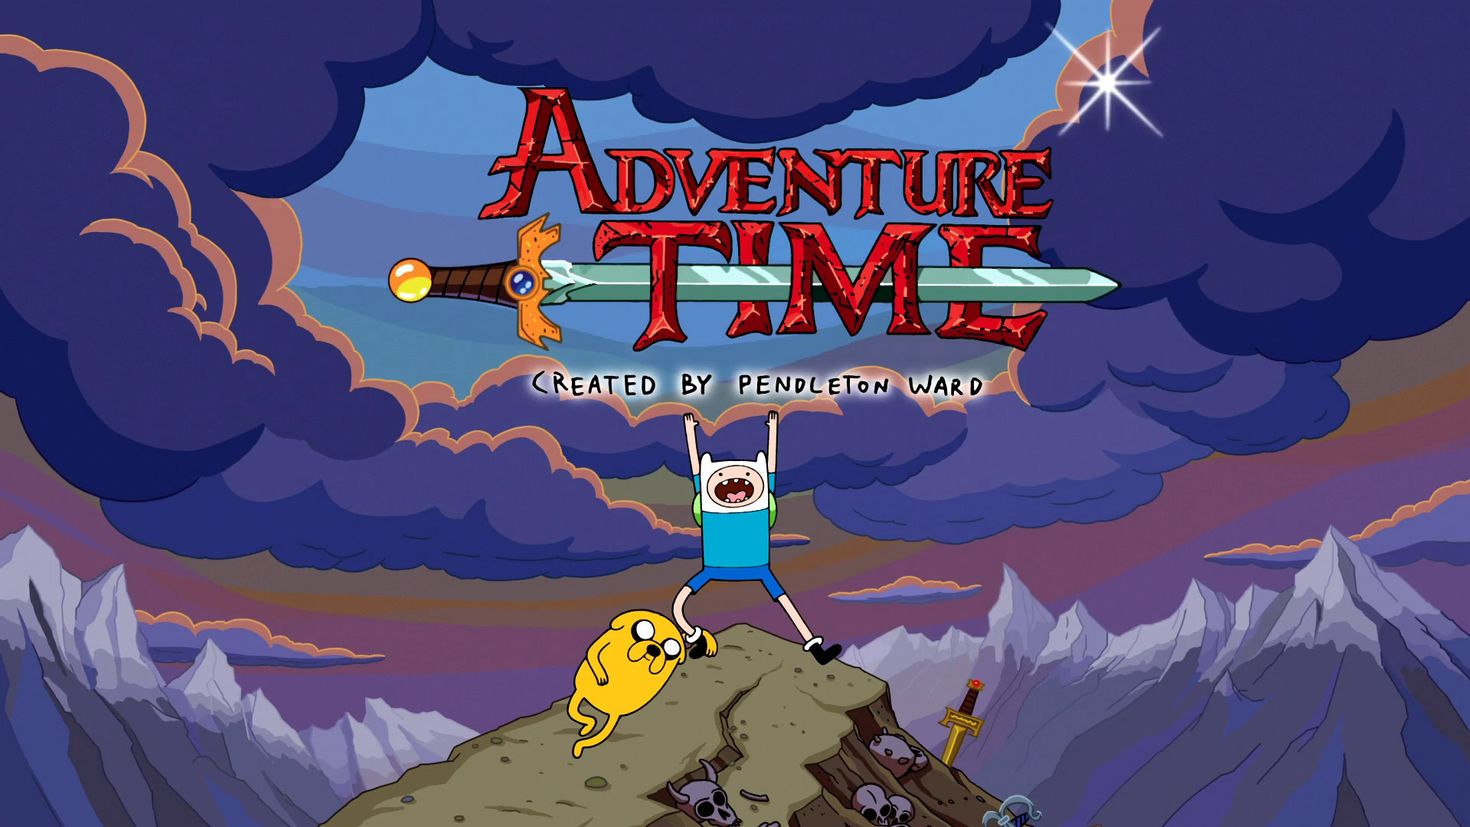 Adventure без рекламы. Время приключений. Adventure time обои. Финн и Джейк обои.